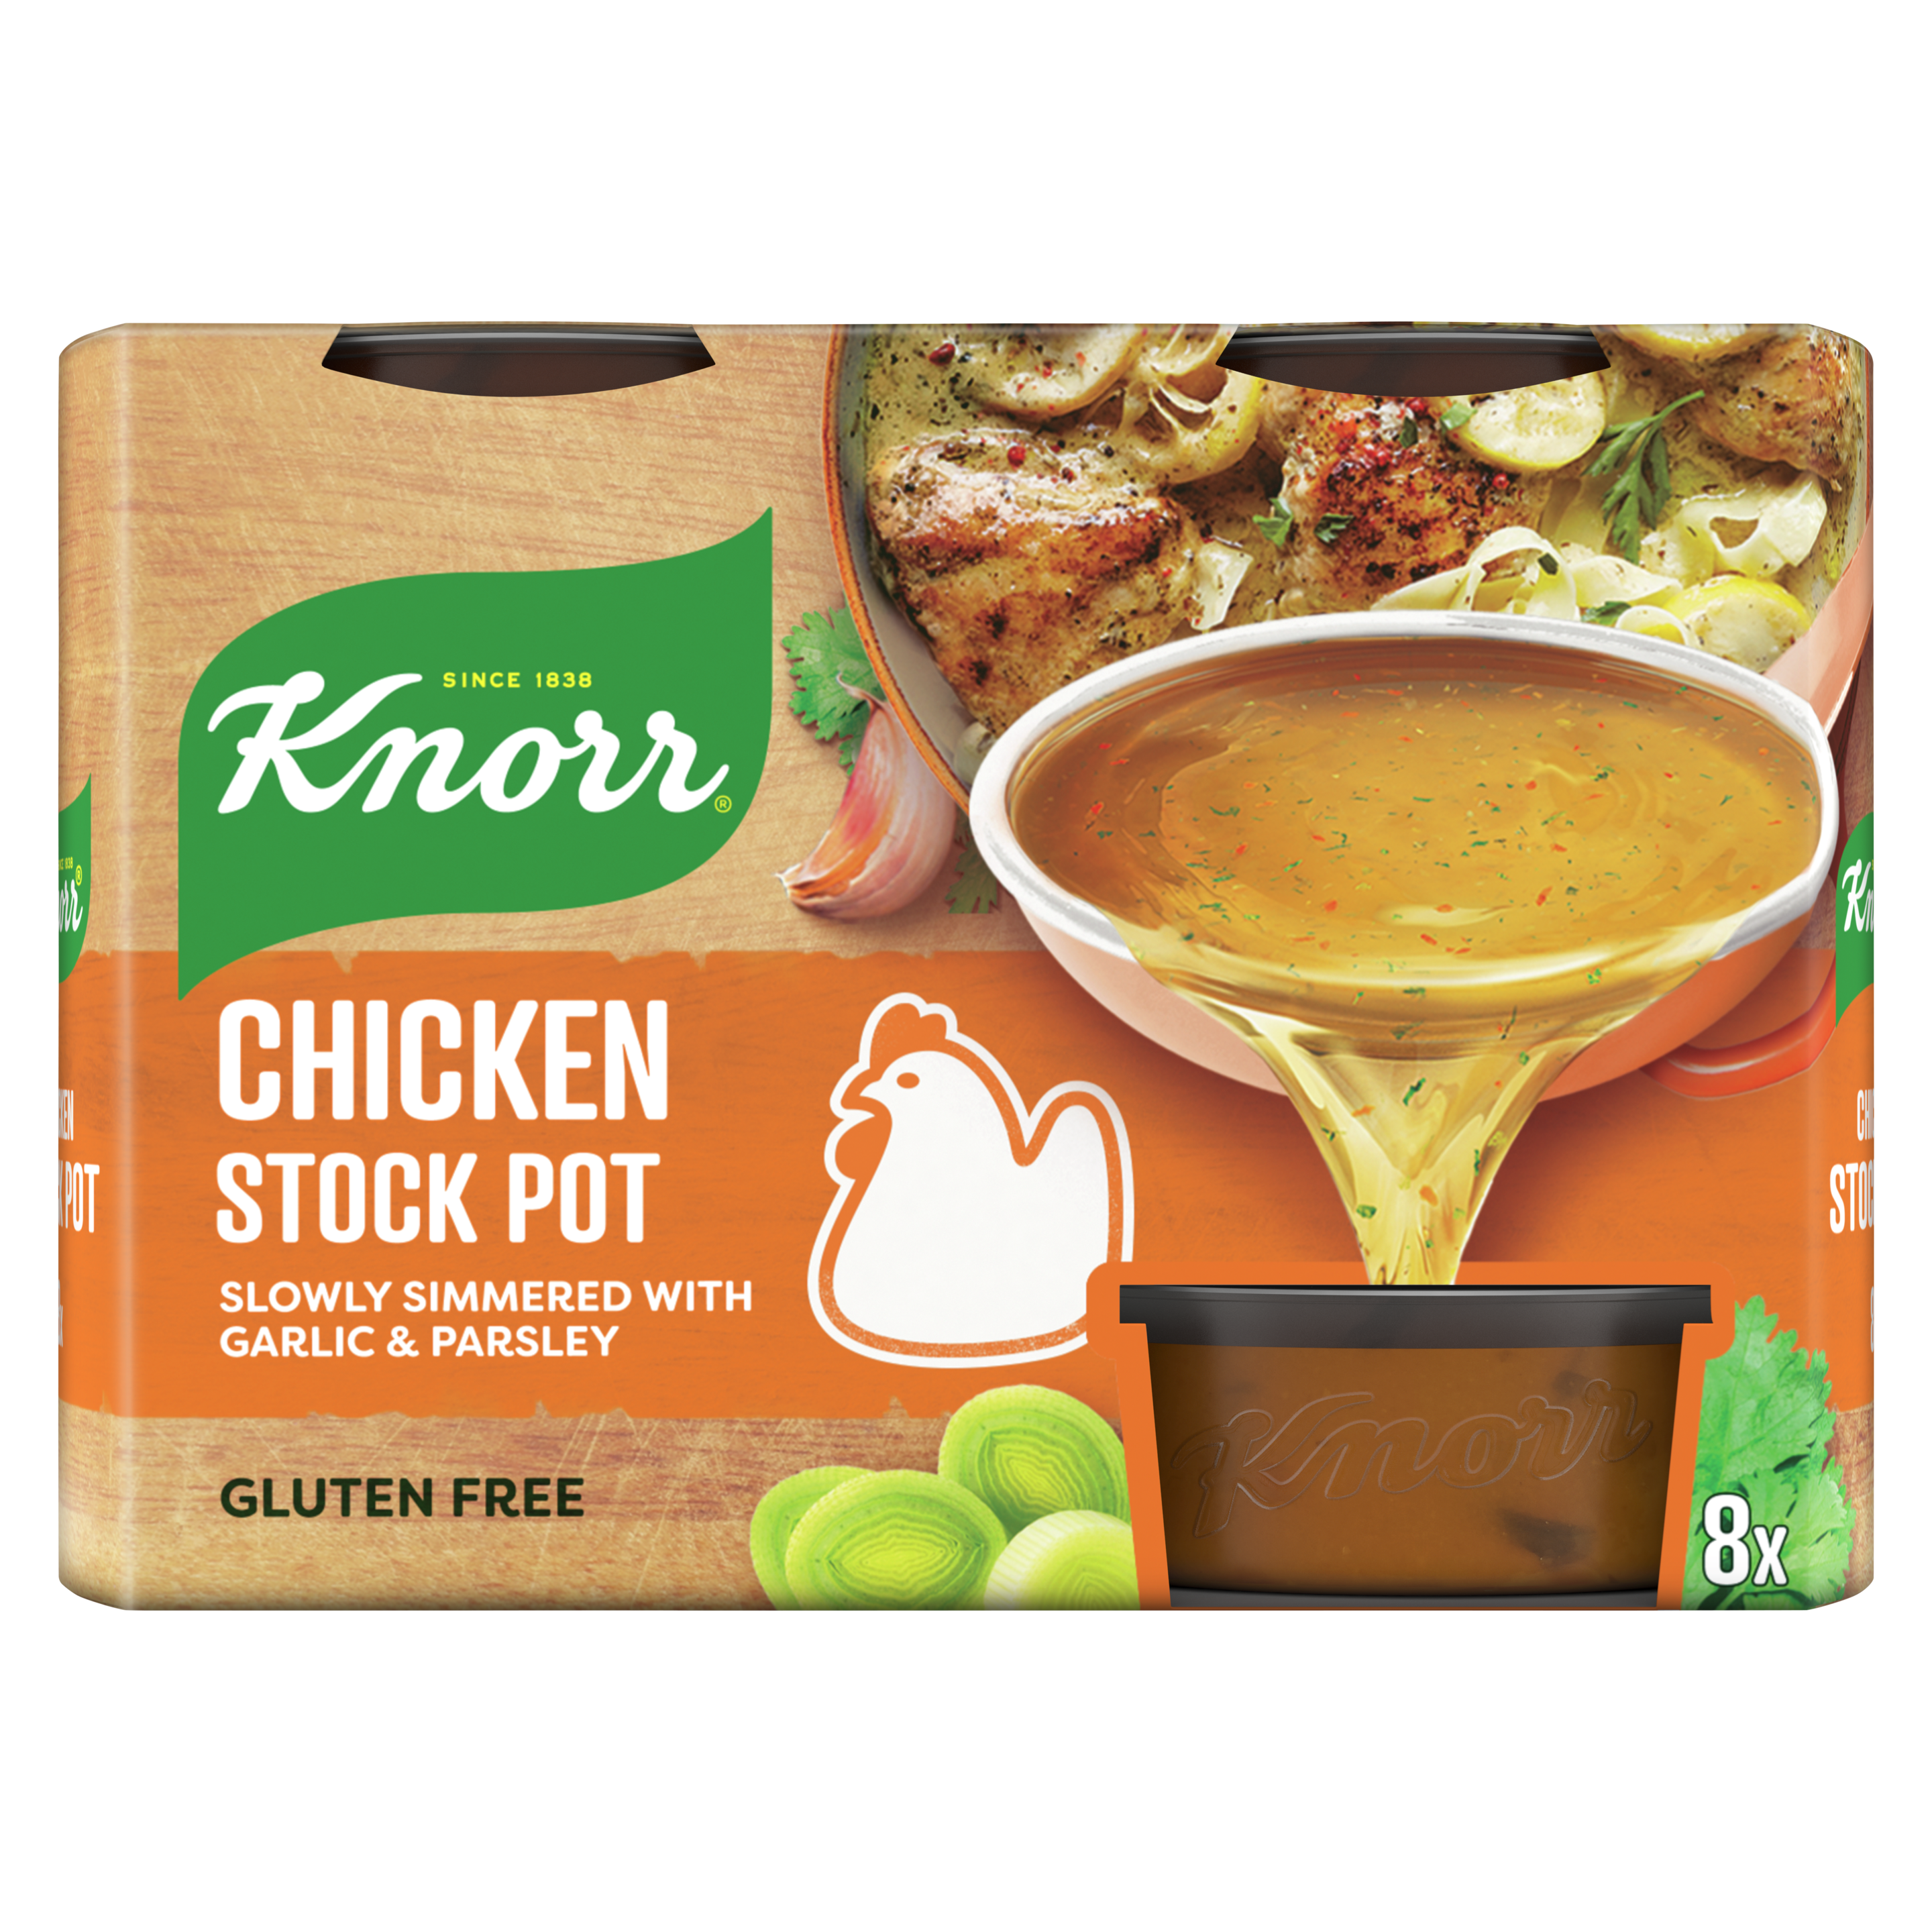 Chicken Stock Pot